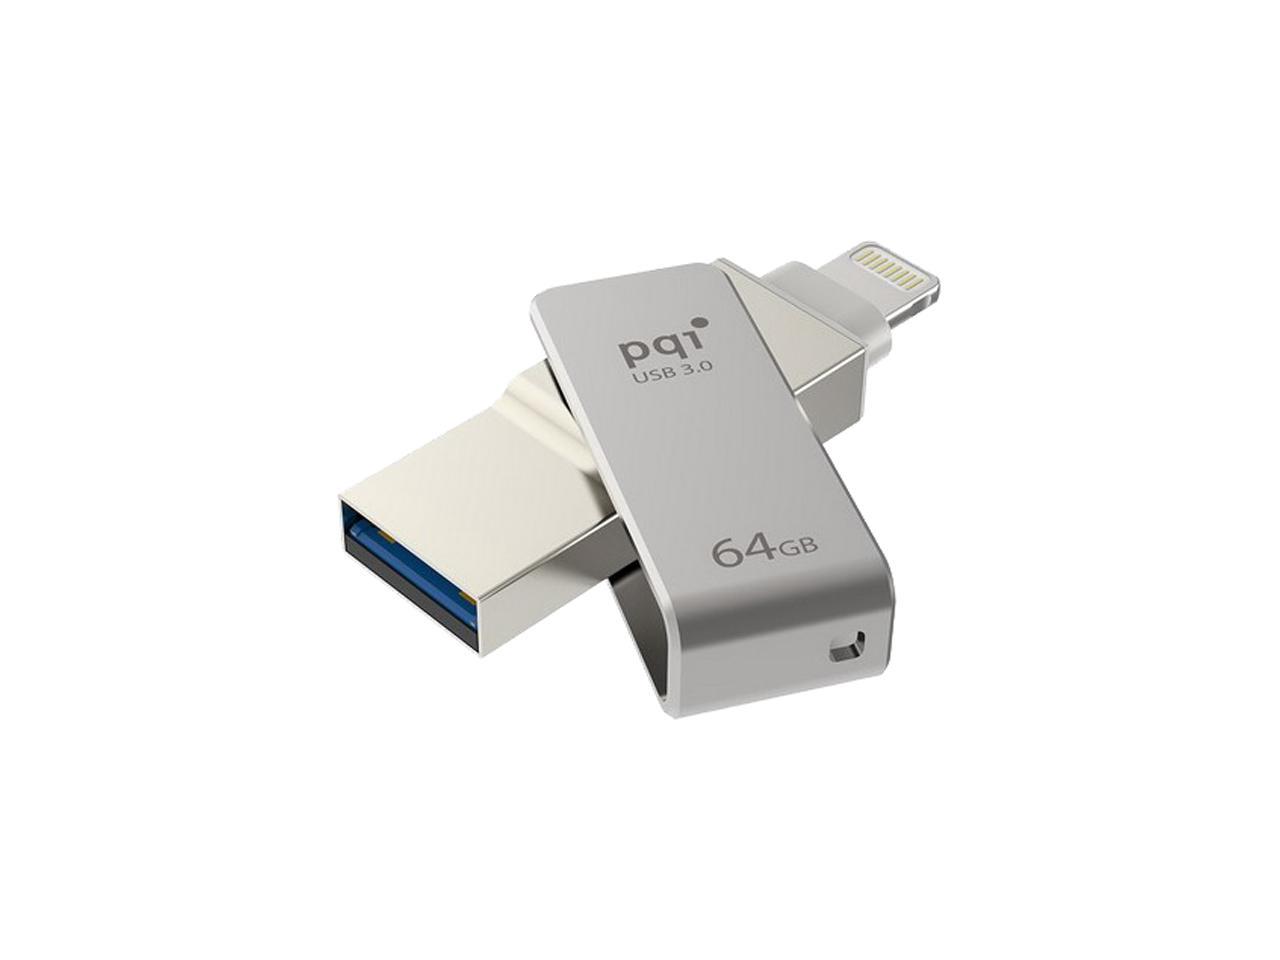 PQI iConnect Mini [Apple MFi] 64GB Mobile Flash Drive w/ Lightning Connector for iPhones / iPads / iPod / Mac & PC USB 3.0 (Iron Gray) Model 6I04-064GR1001